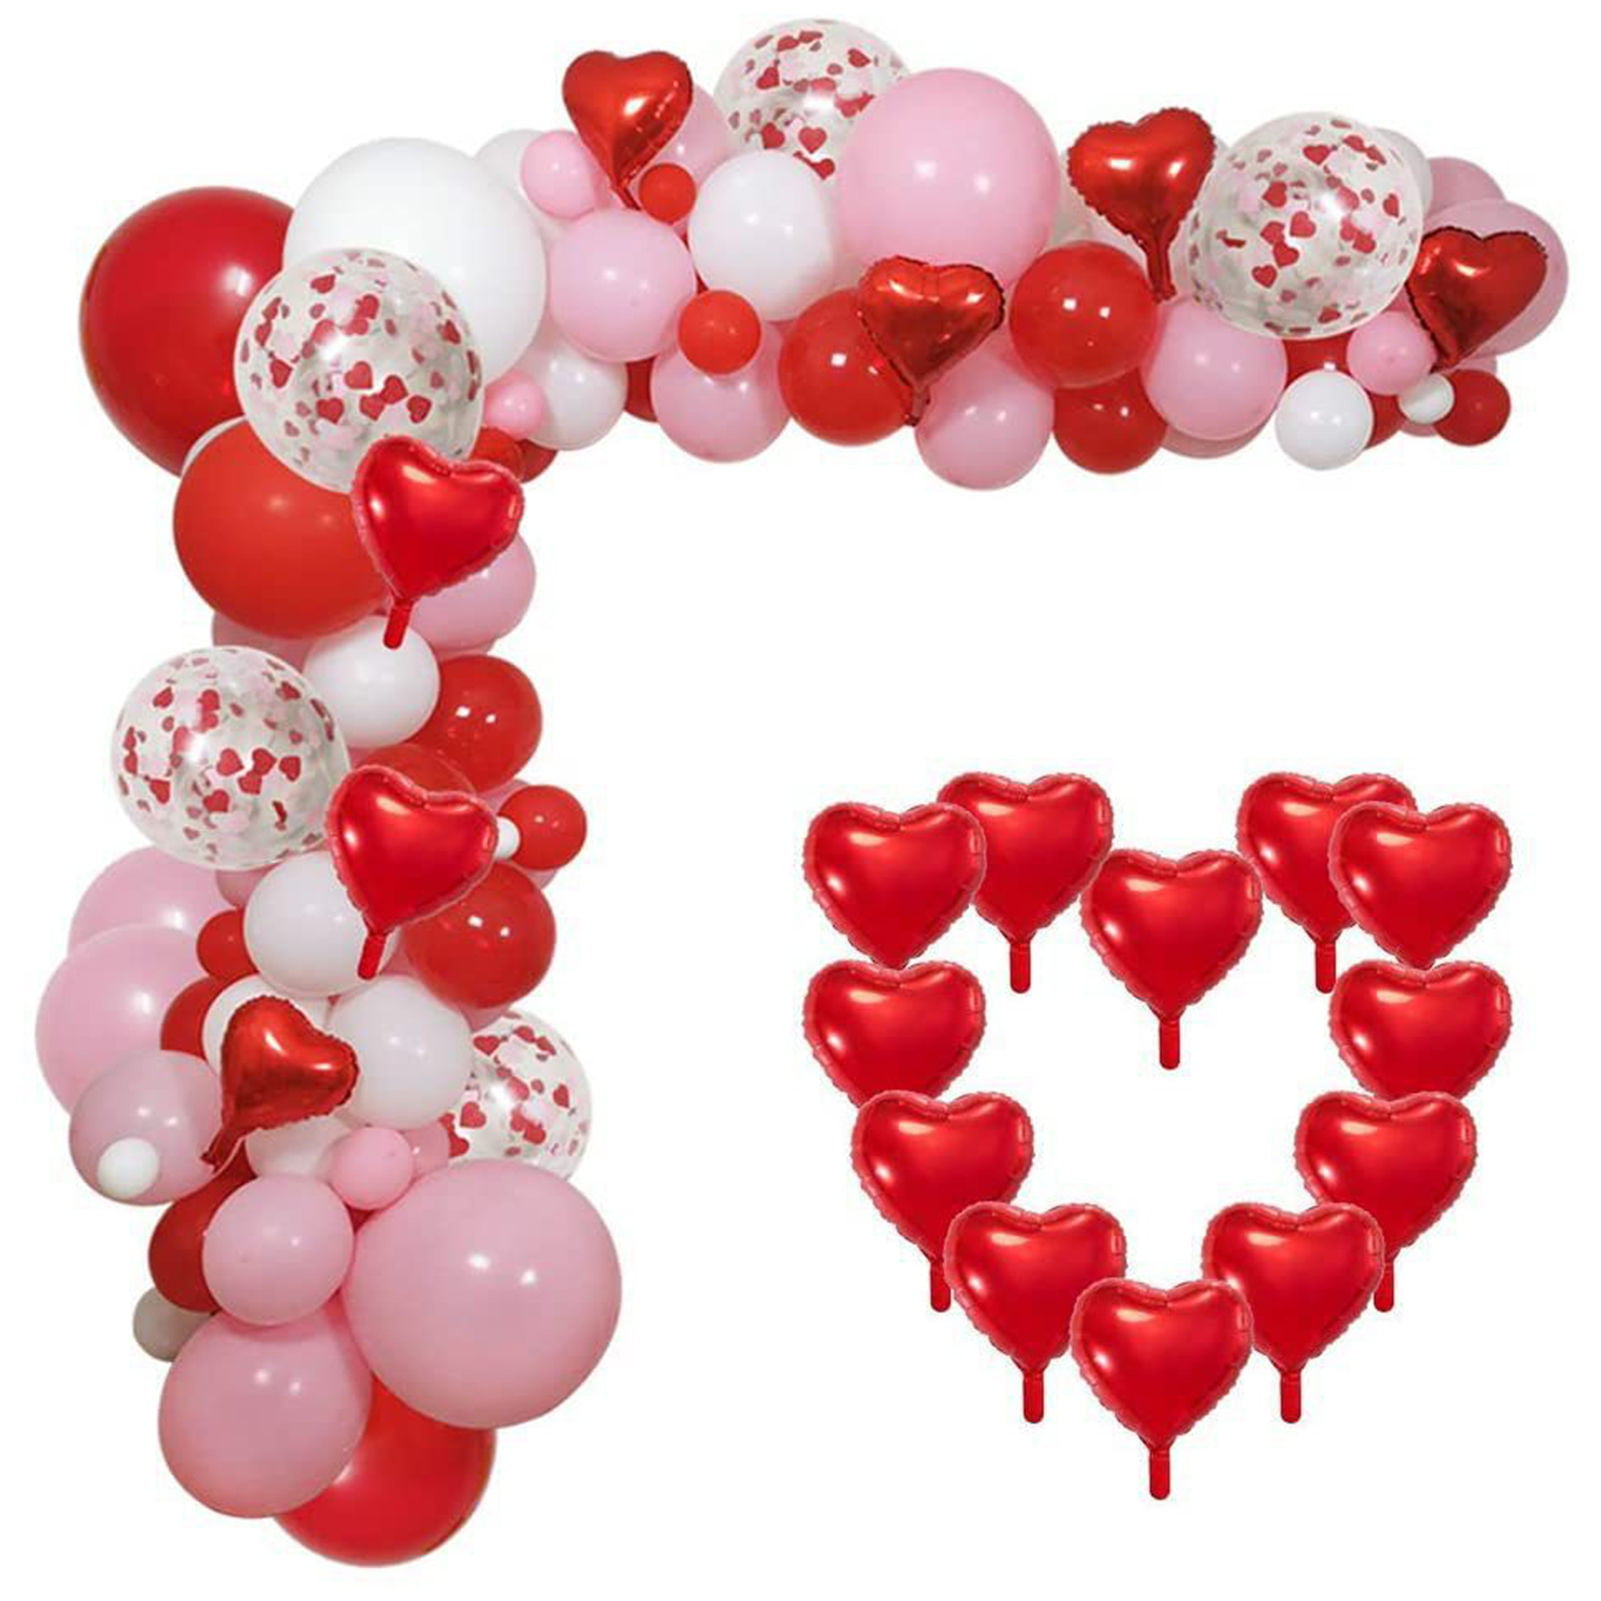 100 X LOVE HEART SHAPE BALLOONS Wedding Party HEART baloon Birthday decoration 